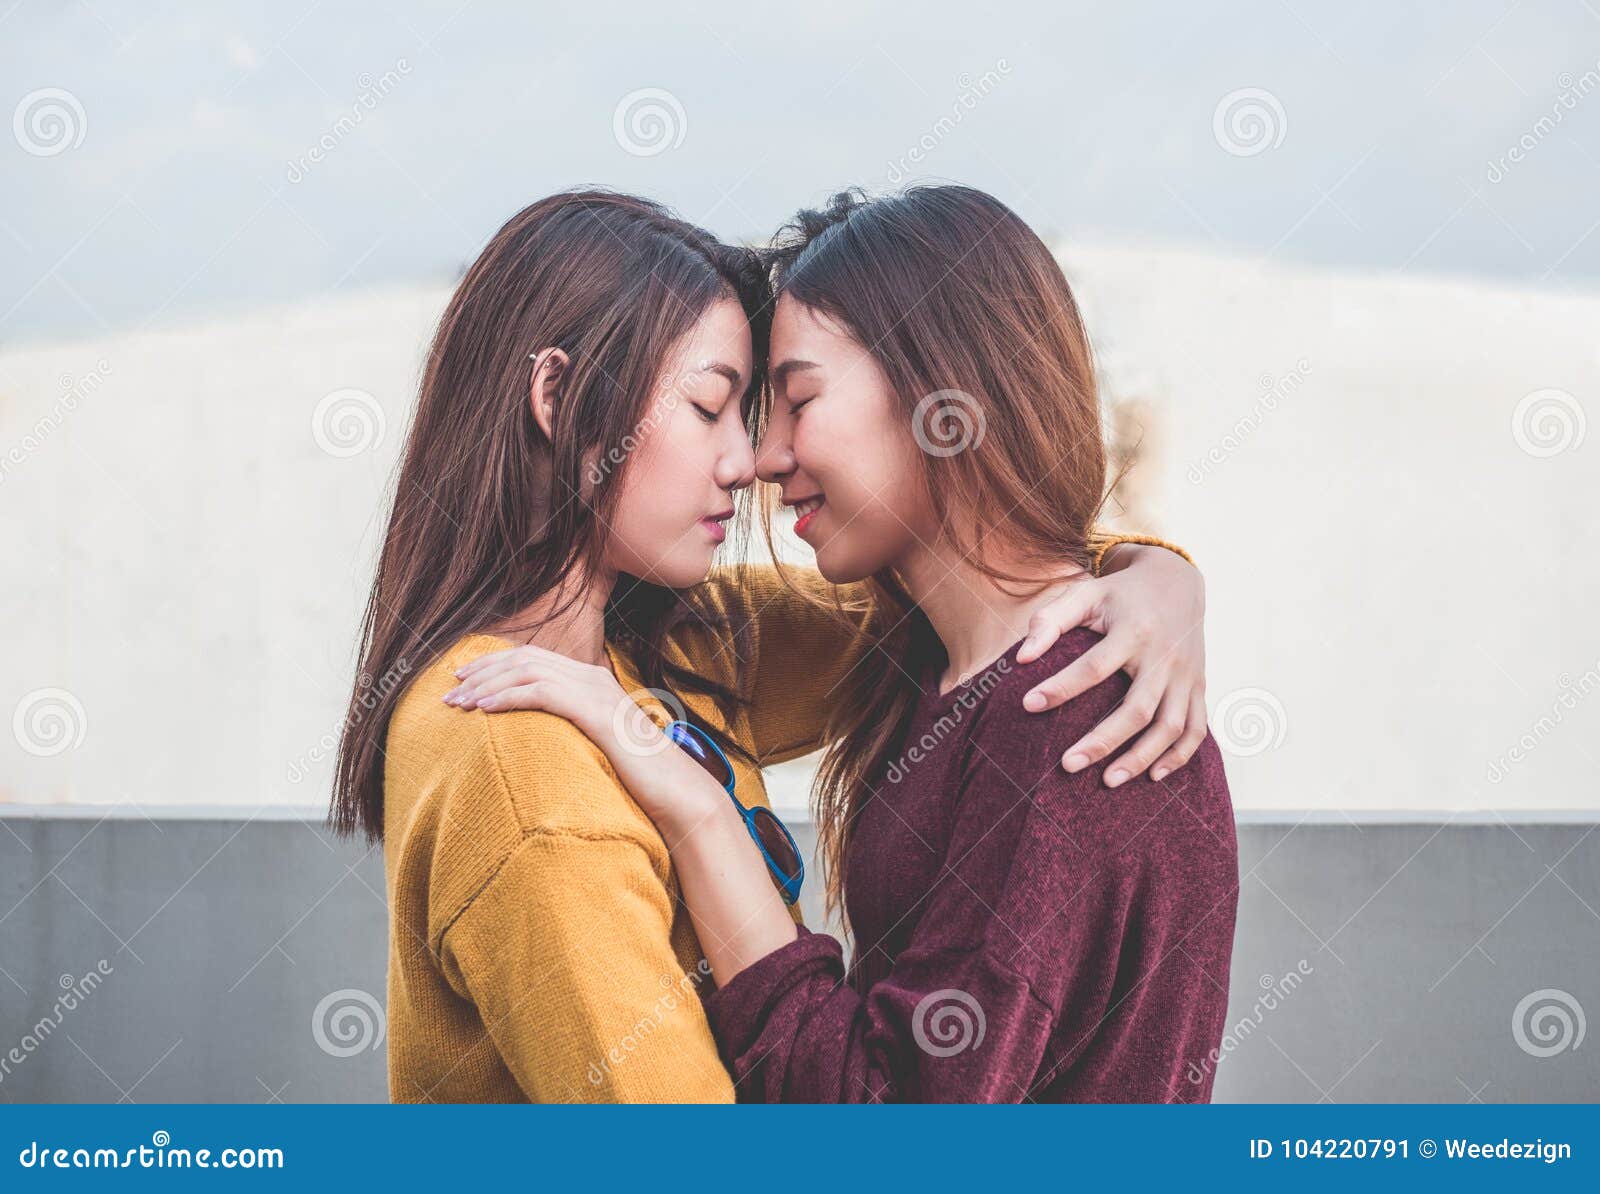 Brazilian Deep Lesbian Kissing